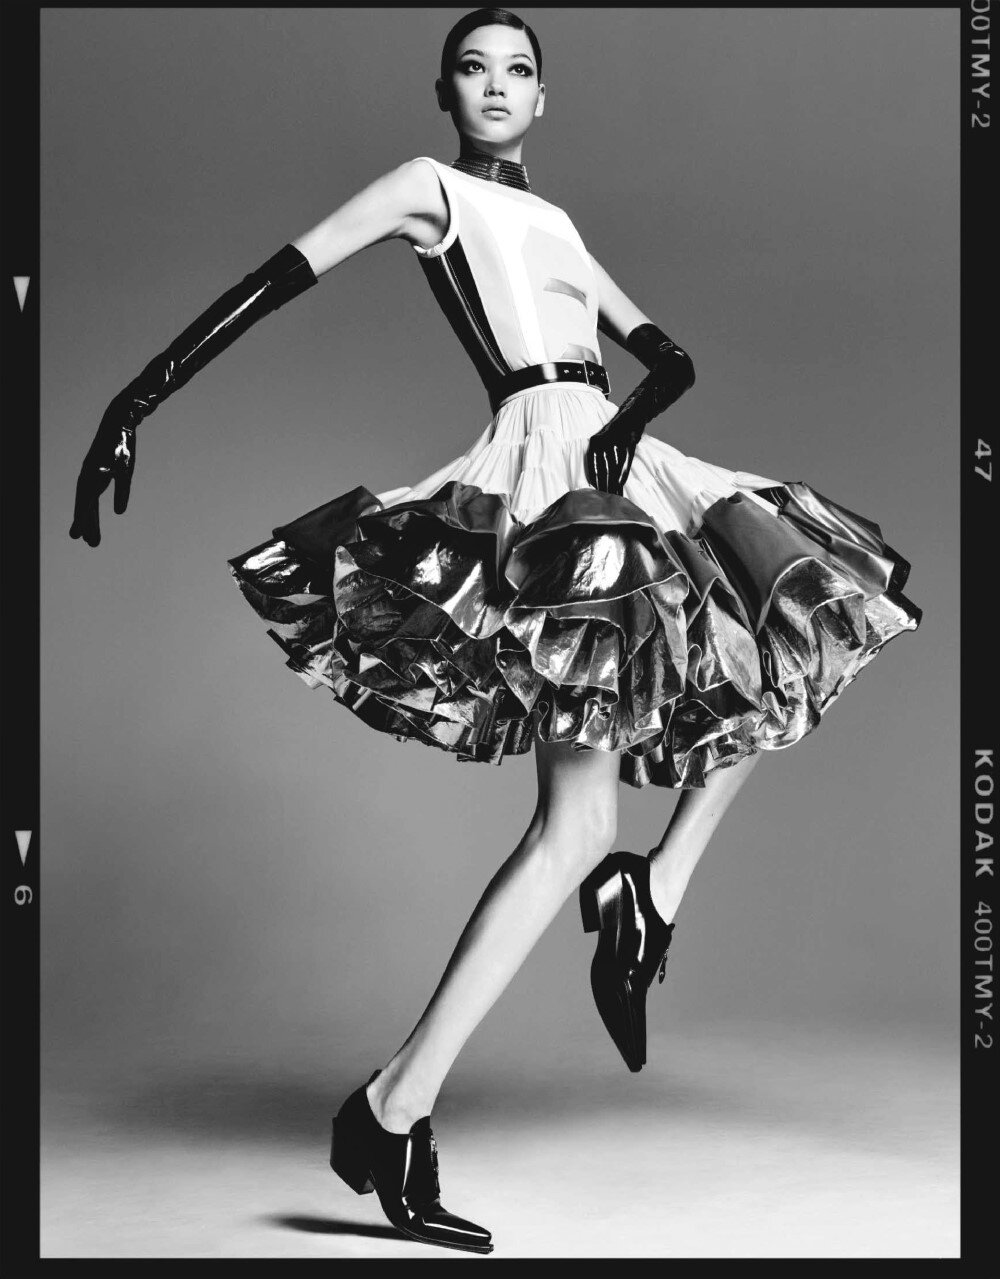 Luigi Iango Vogue Japan Aug 2020 Fashion Story (17).jpg